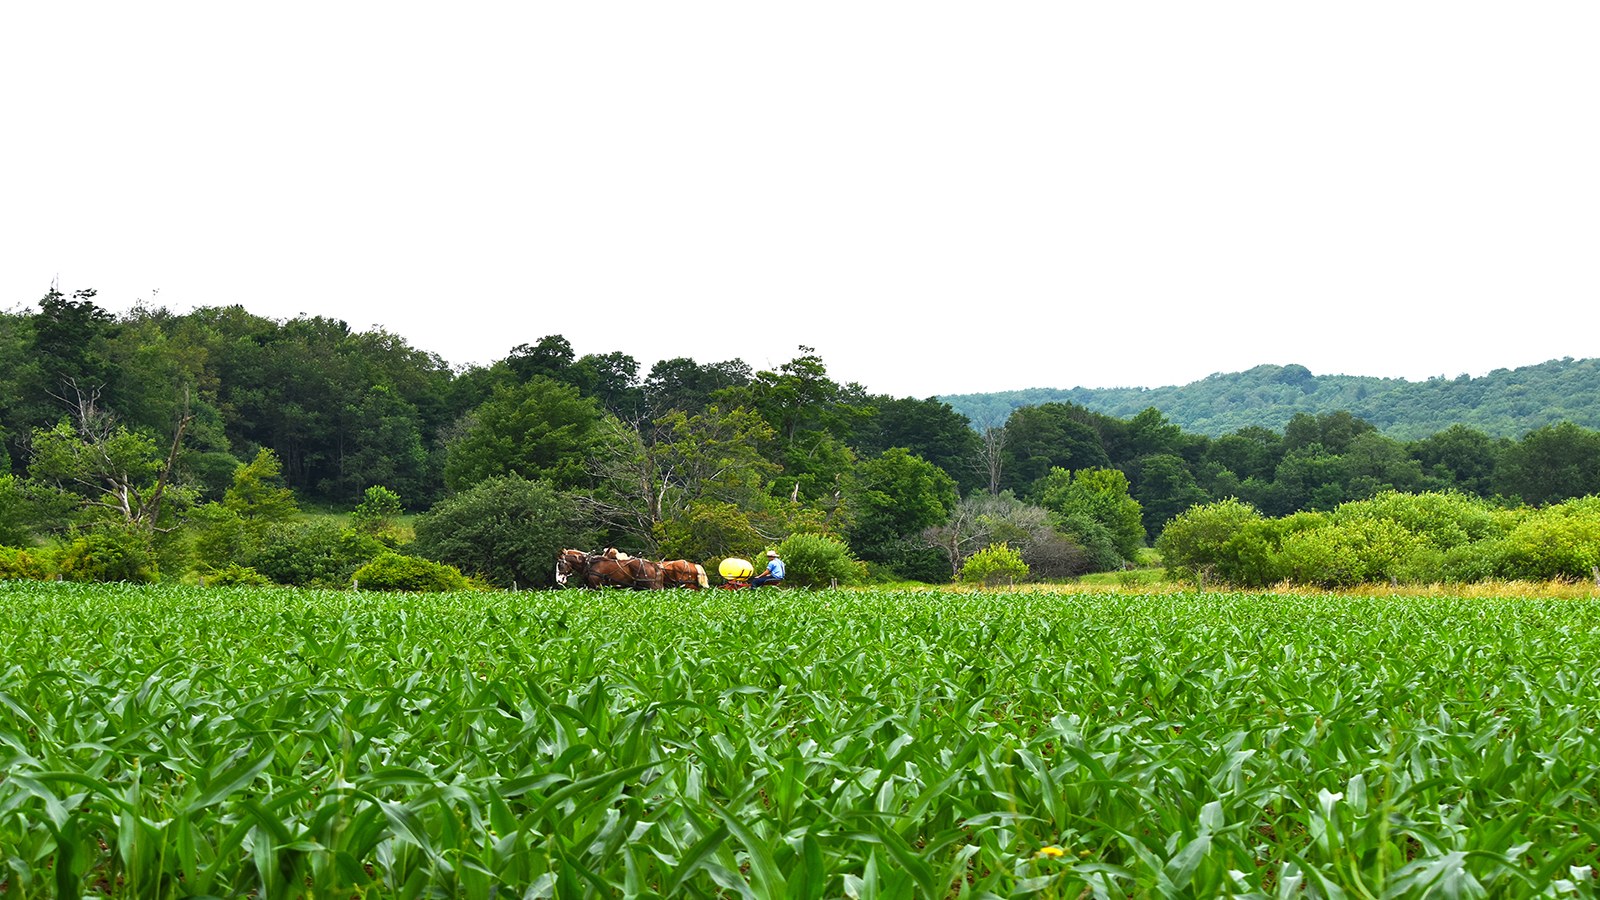 Amish Farming with Horses